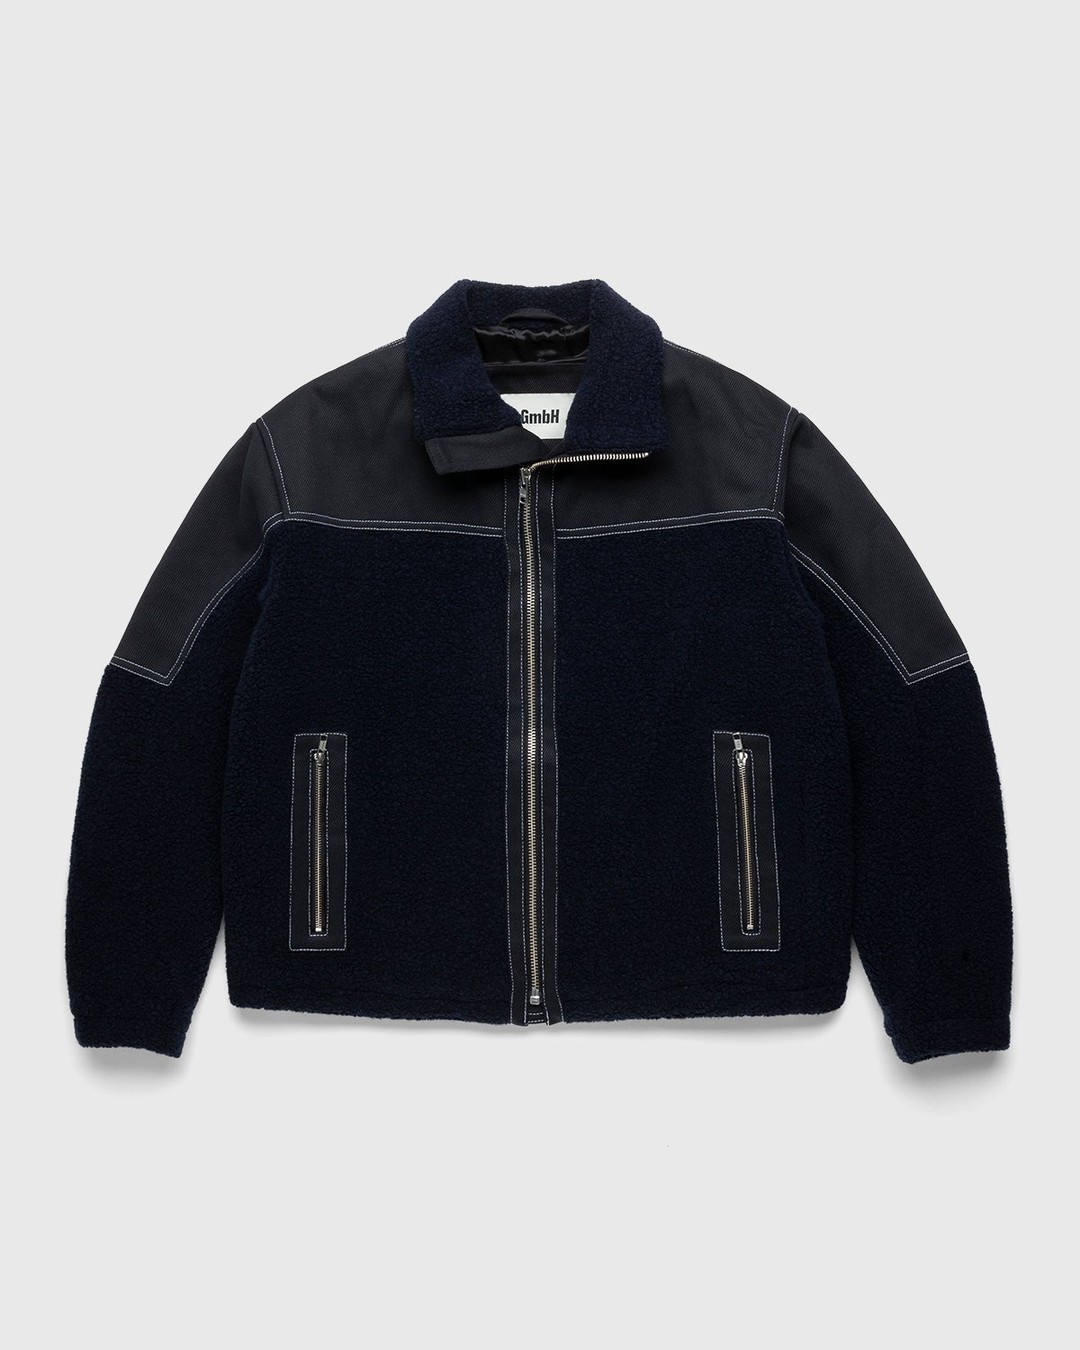 GmbH – Janan Jacket Black/Navy - Outerwear - Blue - Image 1